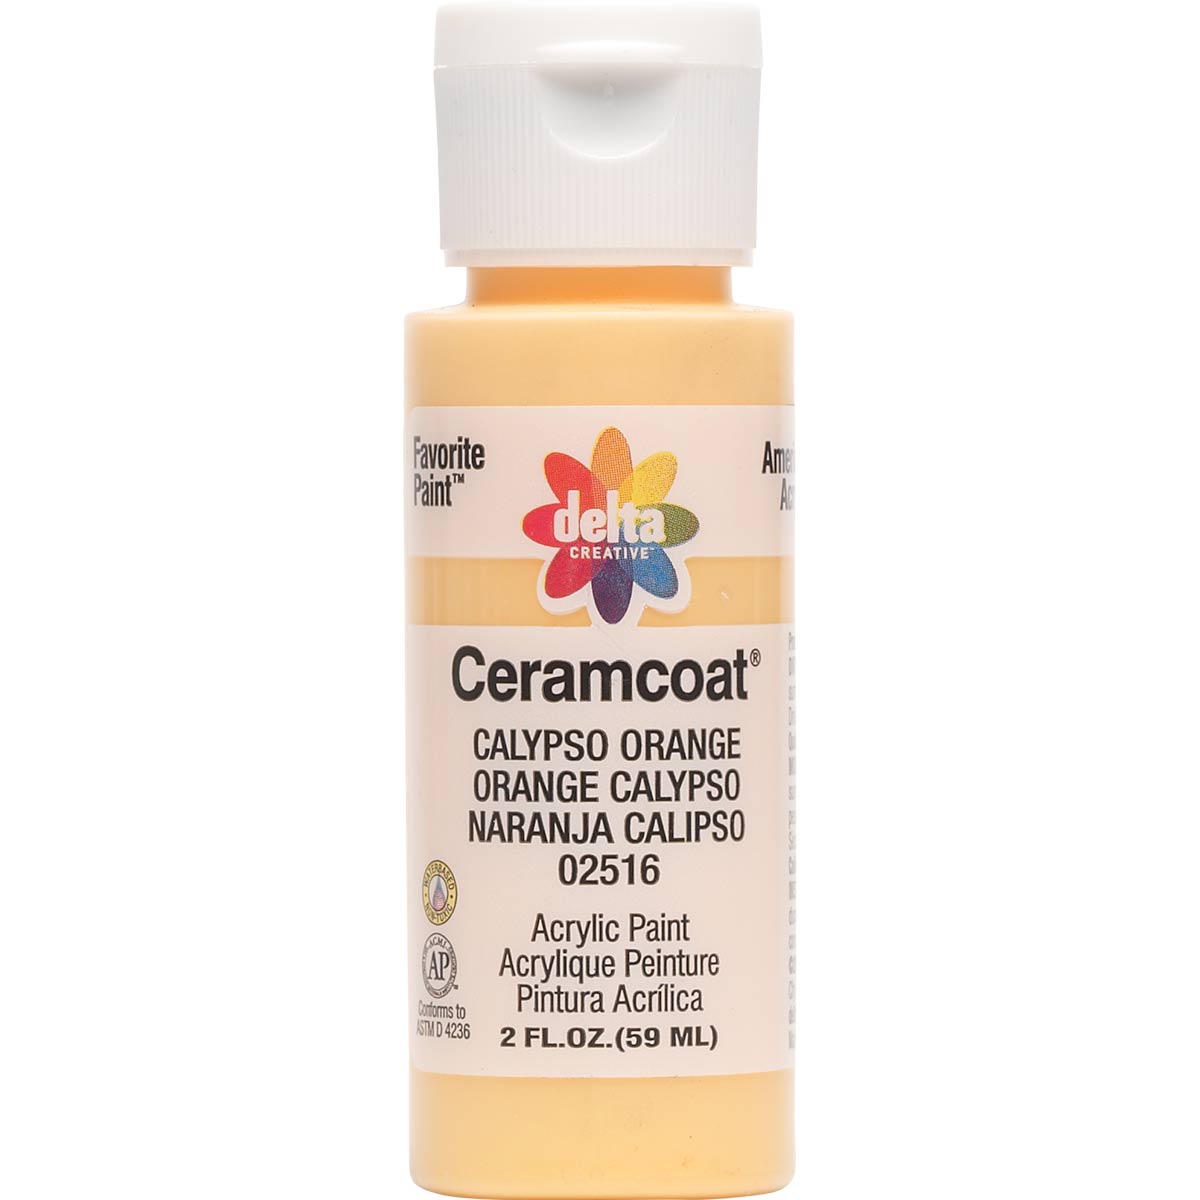 Delta Ceramcoat Acrylic Paint - Calypso Orange, 2 oz. - 025160202W